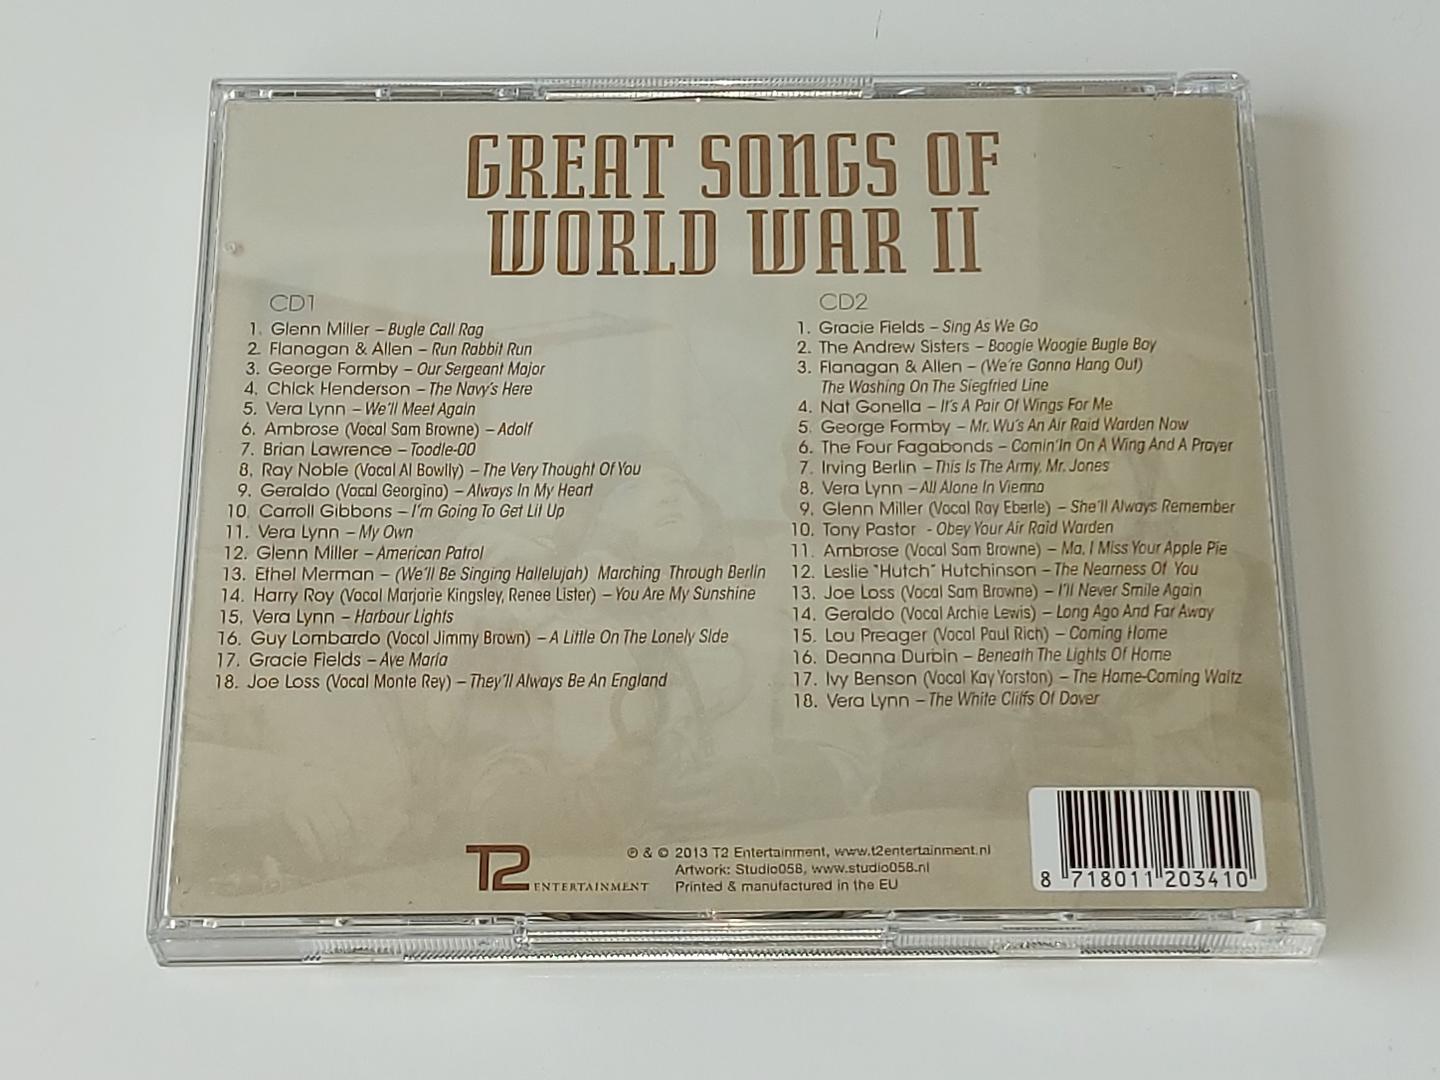  - Great Songs of World War II (2CD)